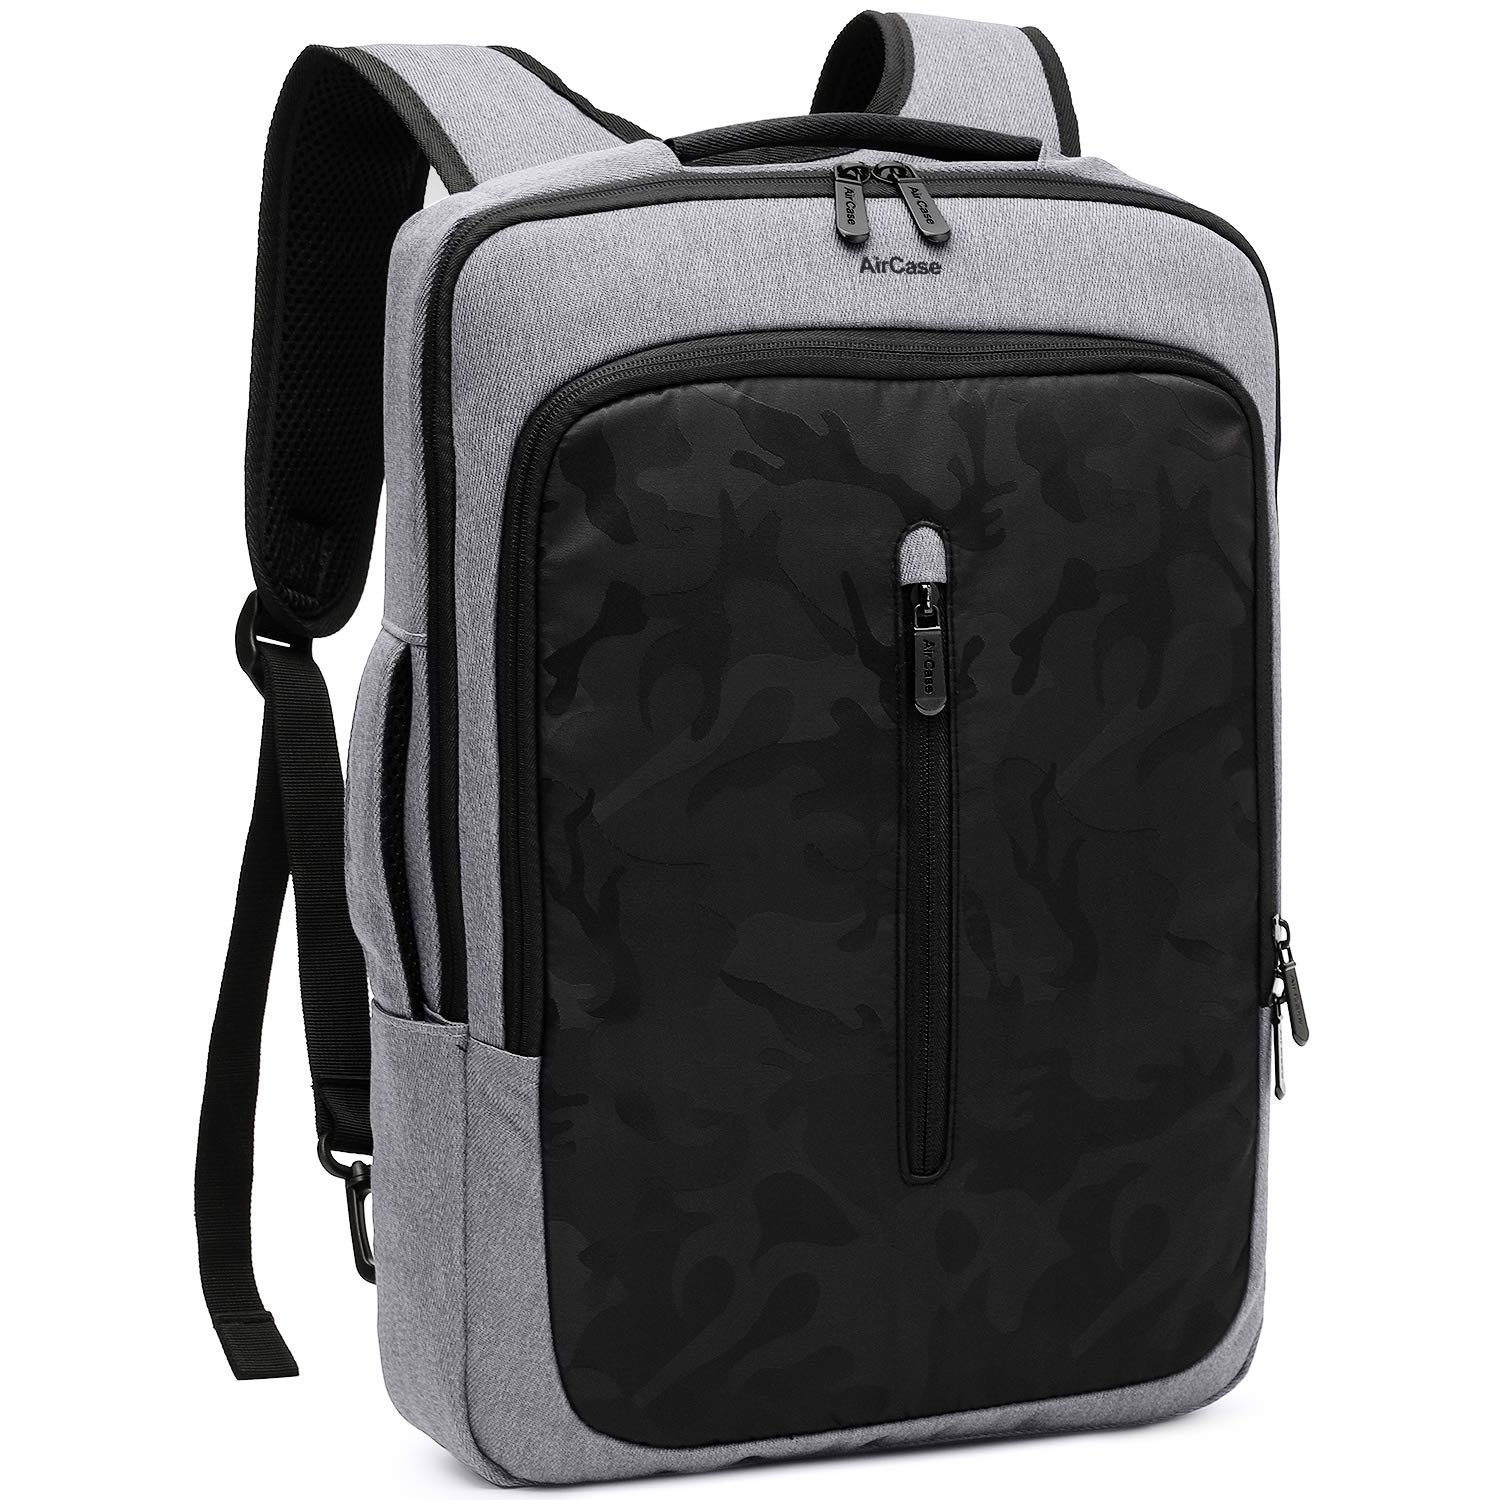 AirCase C40 Laptop Backpack - Rucksacks Messenger Bag